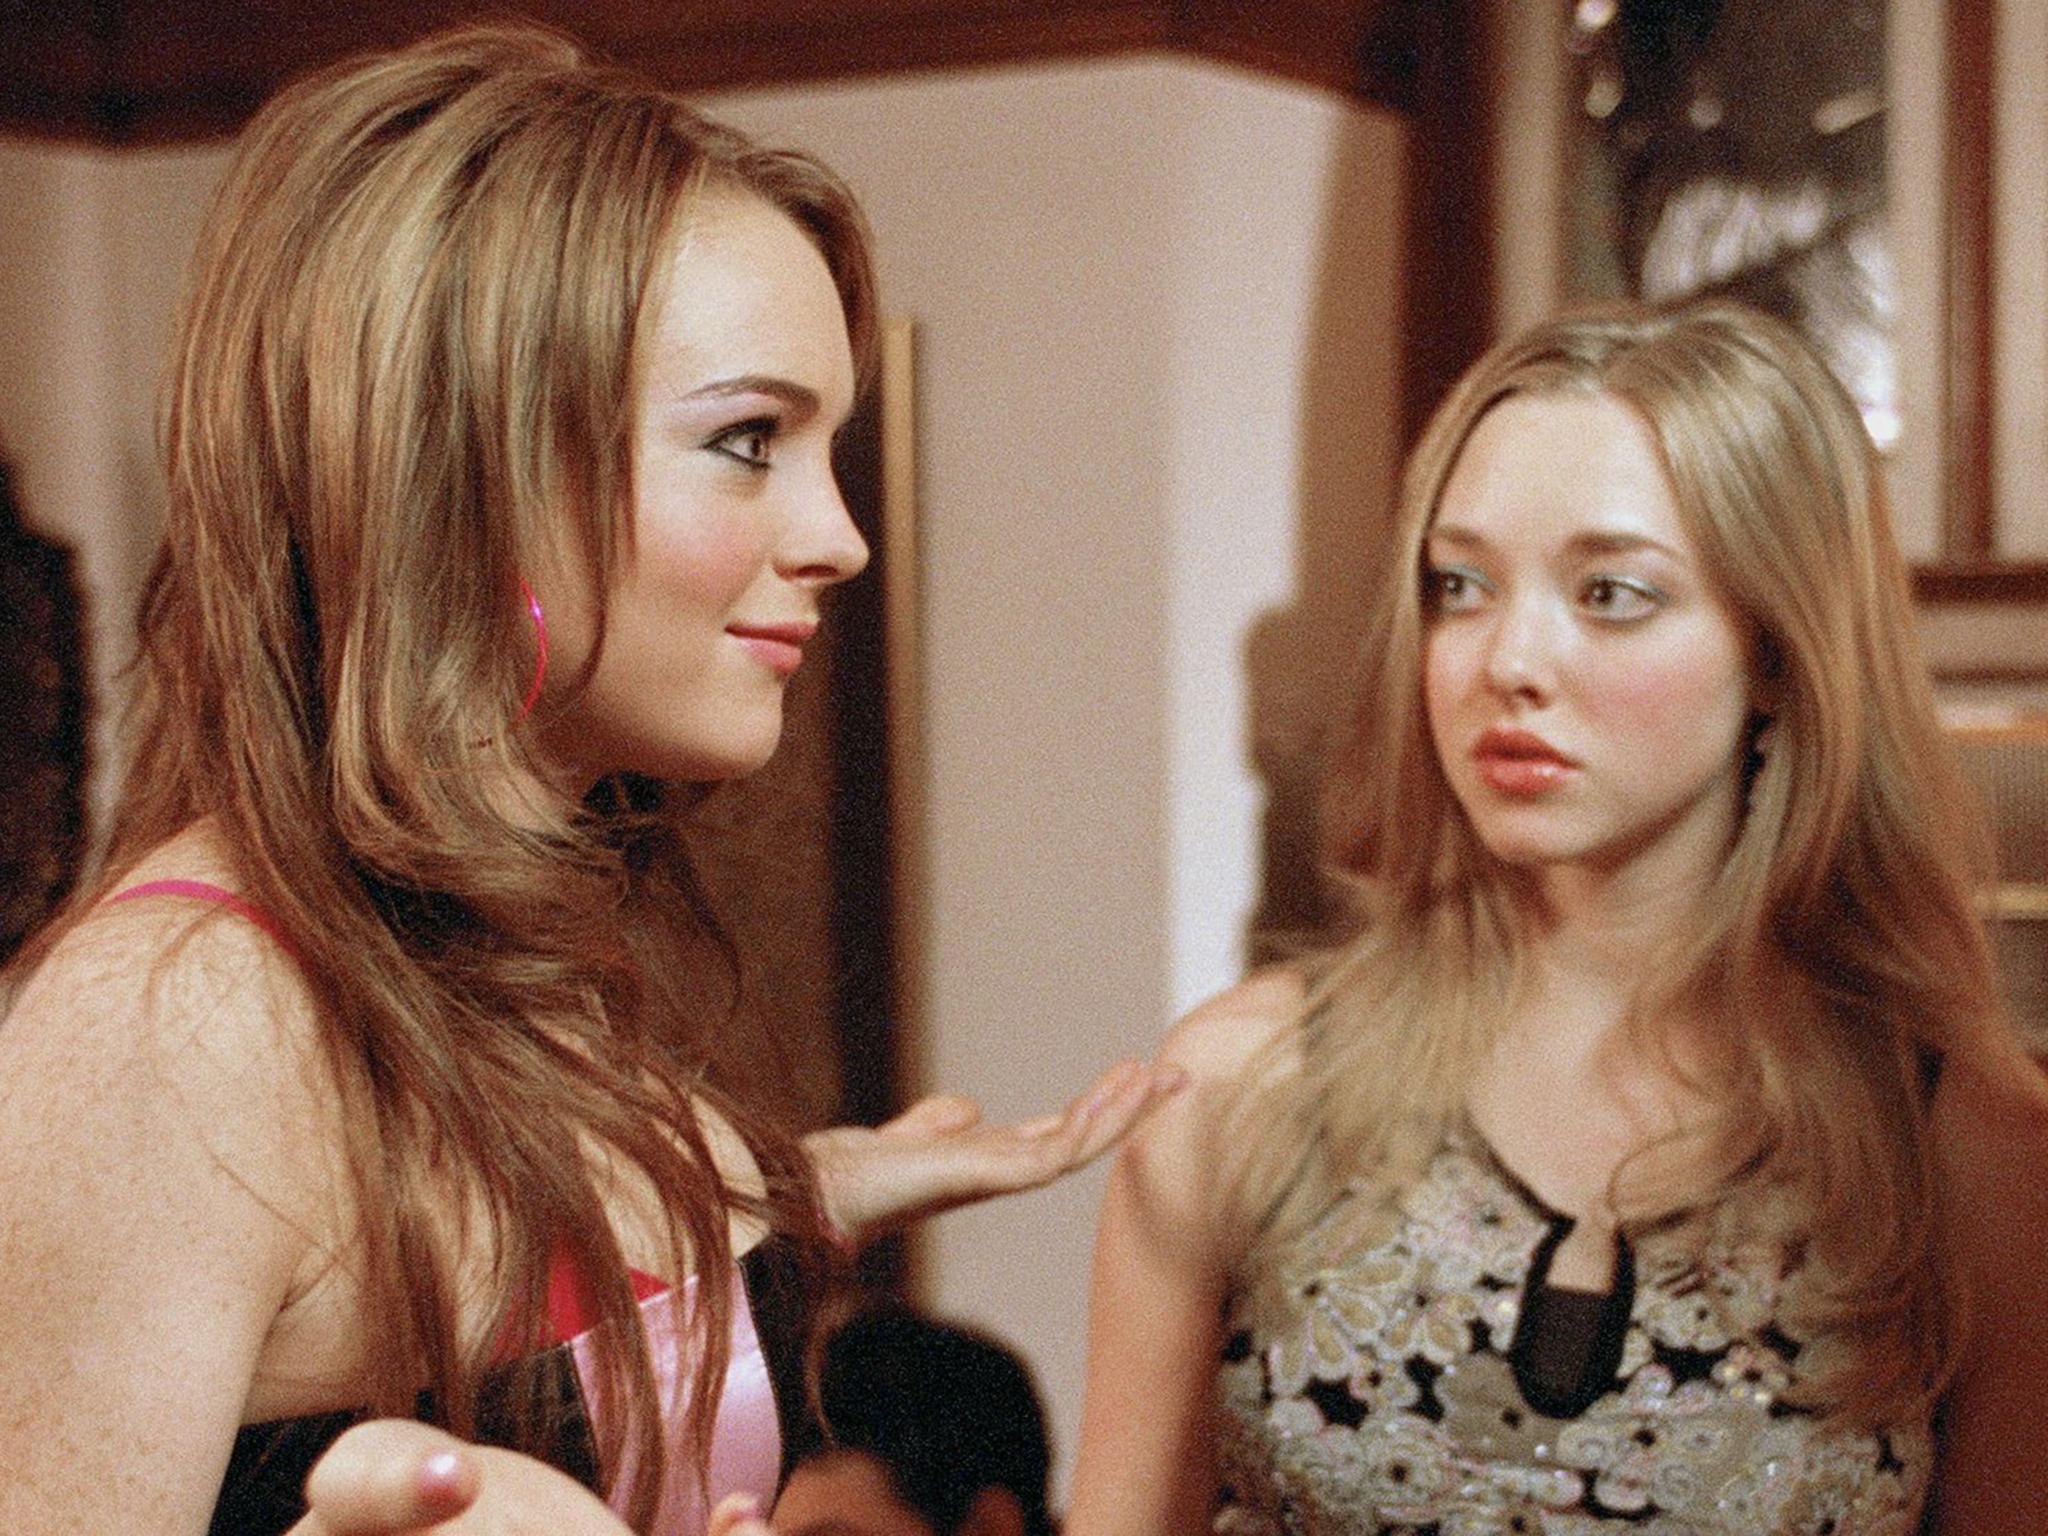 Lindsay Lohan and Amanda Seyfried in ‘Mean Girls’